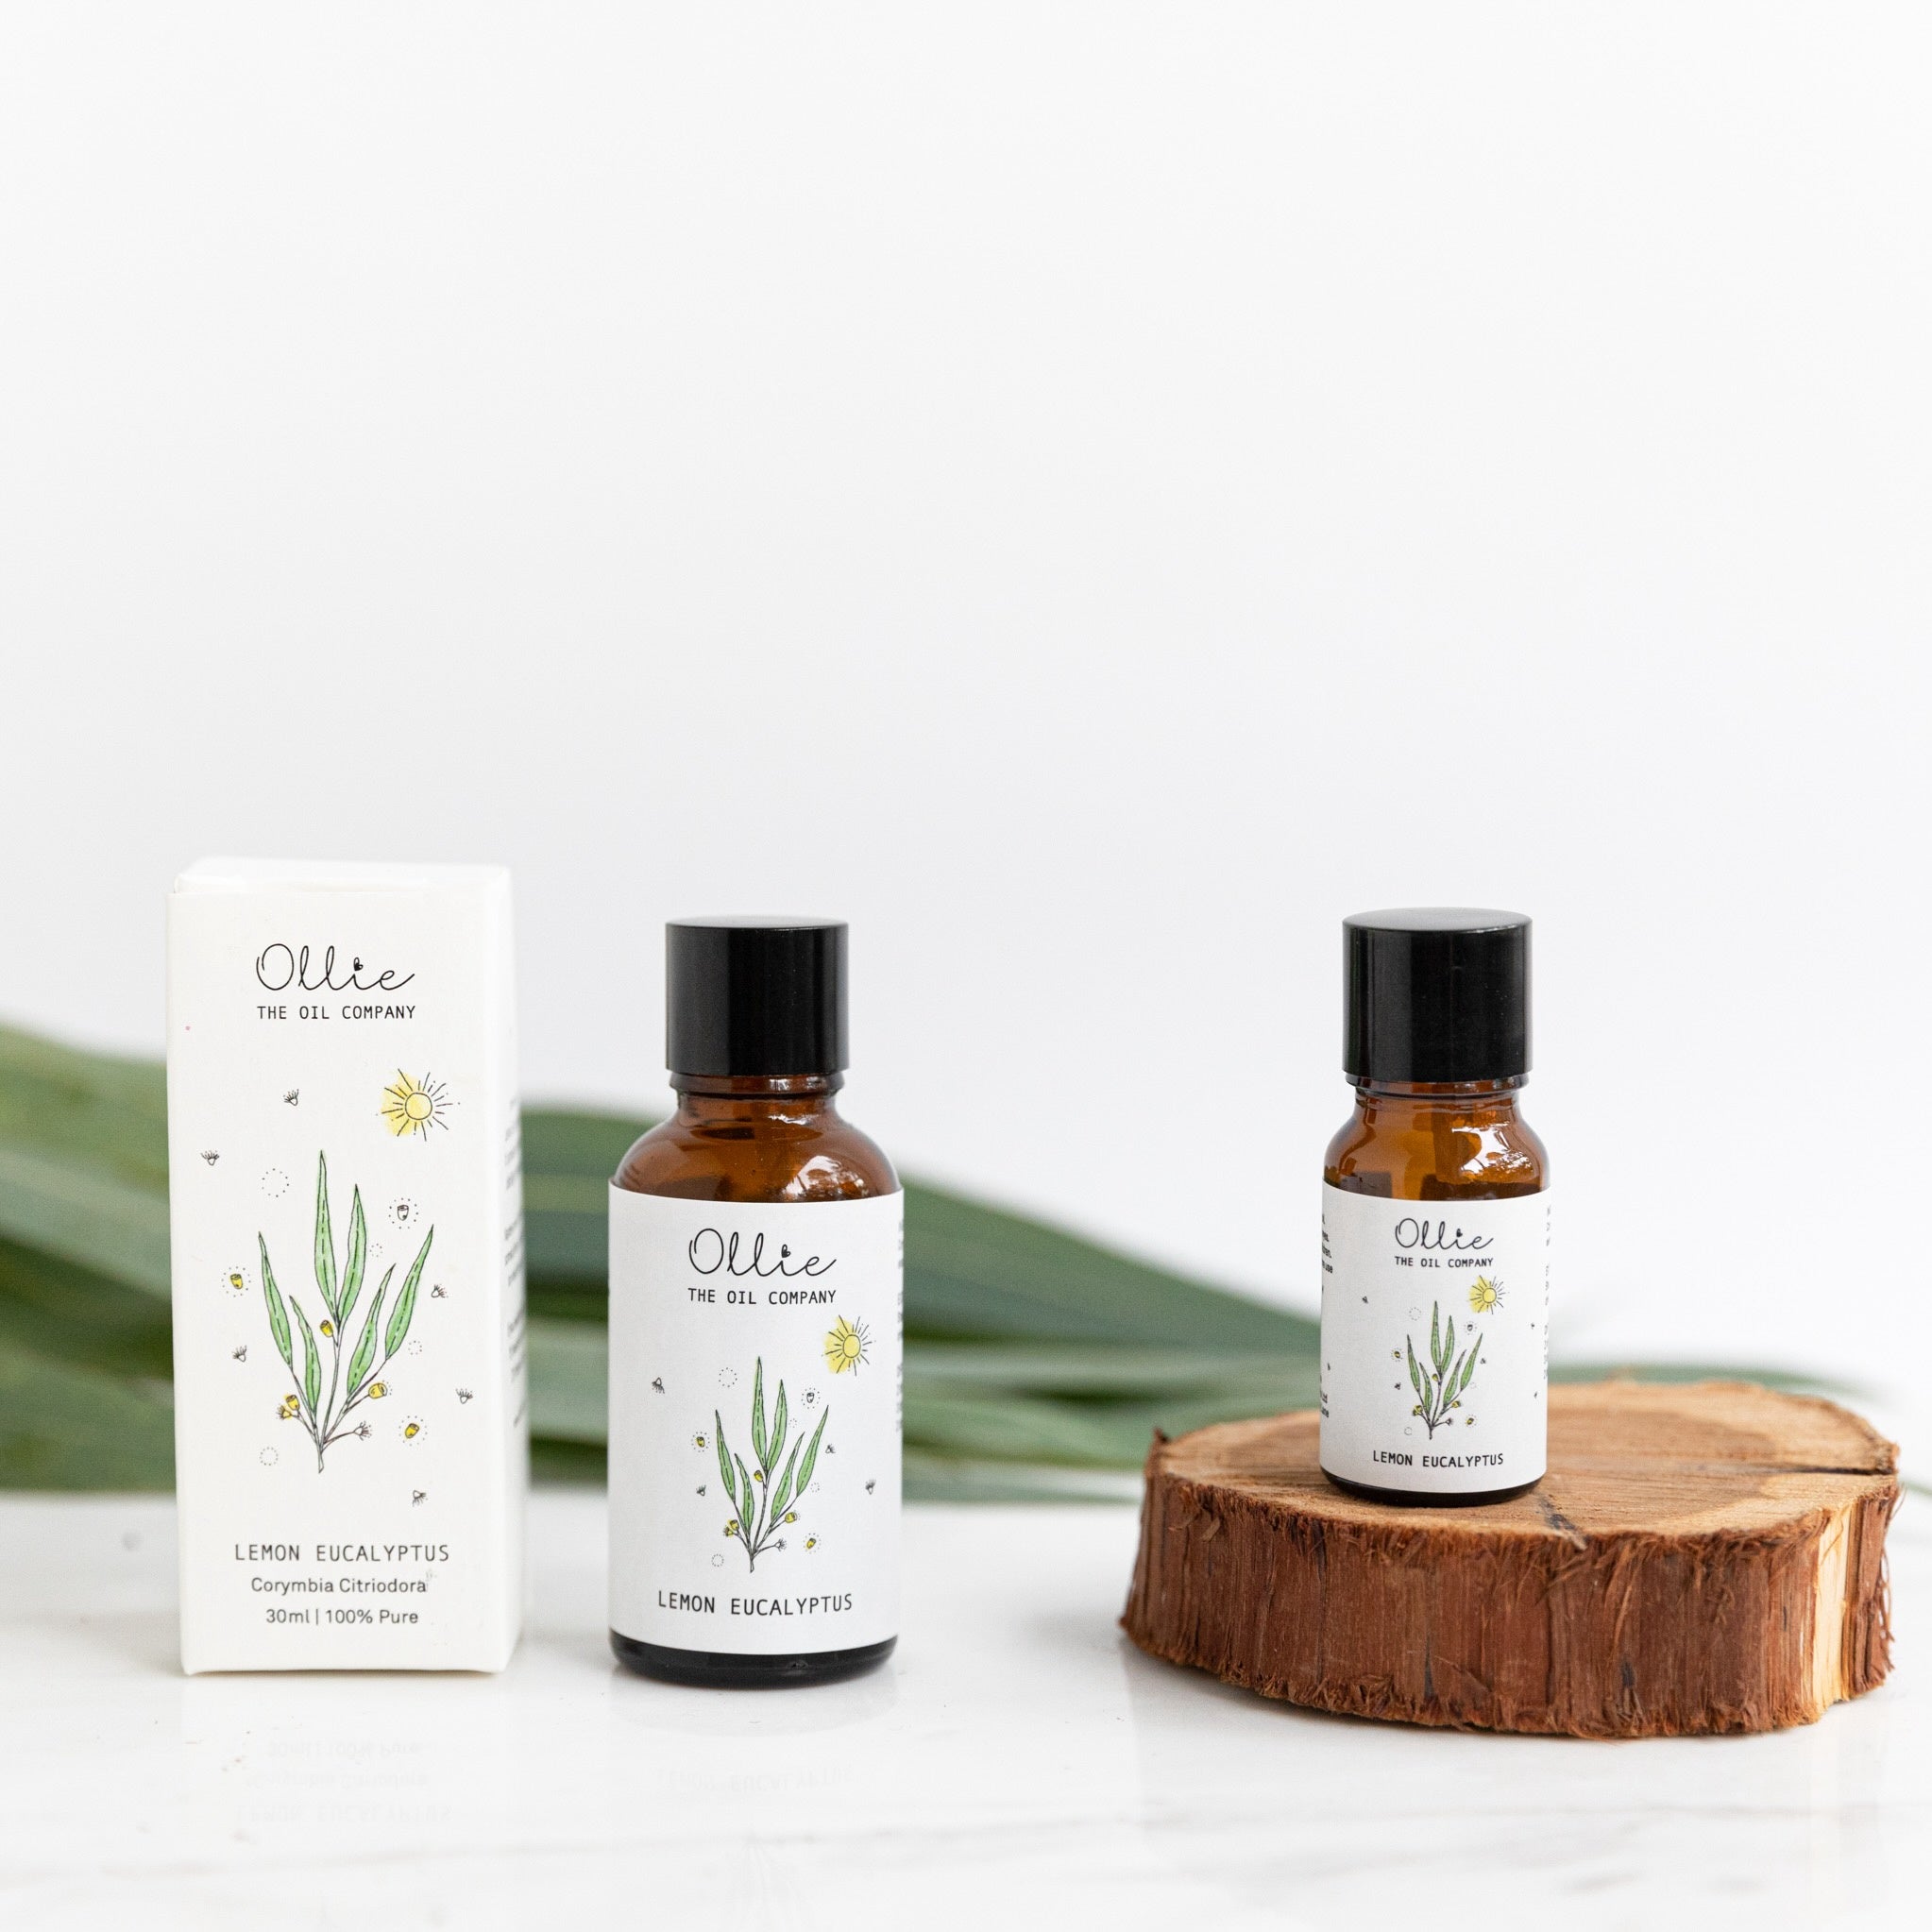 Ollie Lemon Eucalyptus Oil | Home fragrances | The Green Collective SG